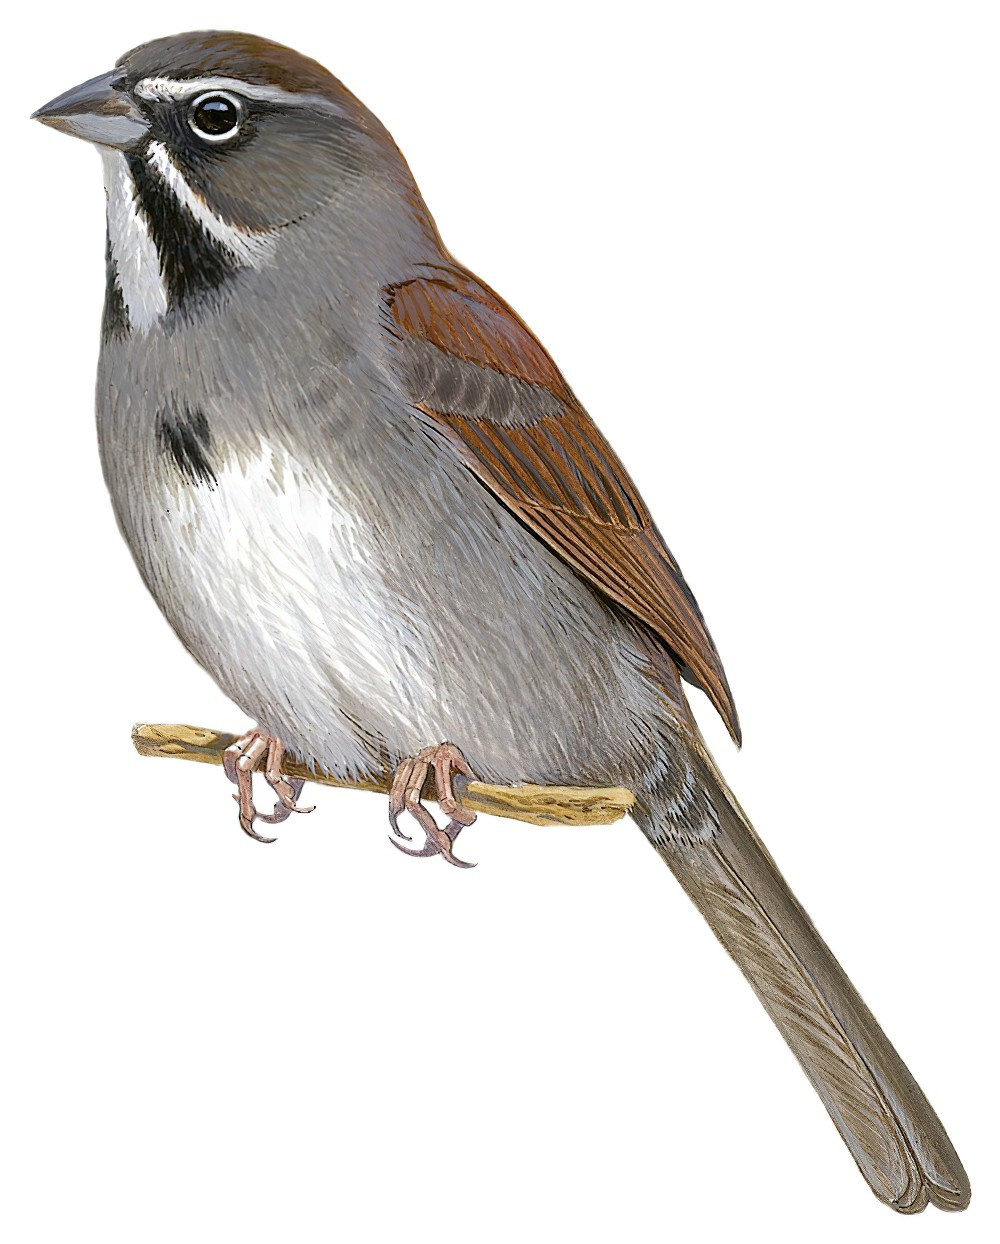 Five-striped Sparrow / Amphispiza quinquestriata